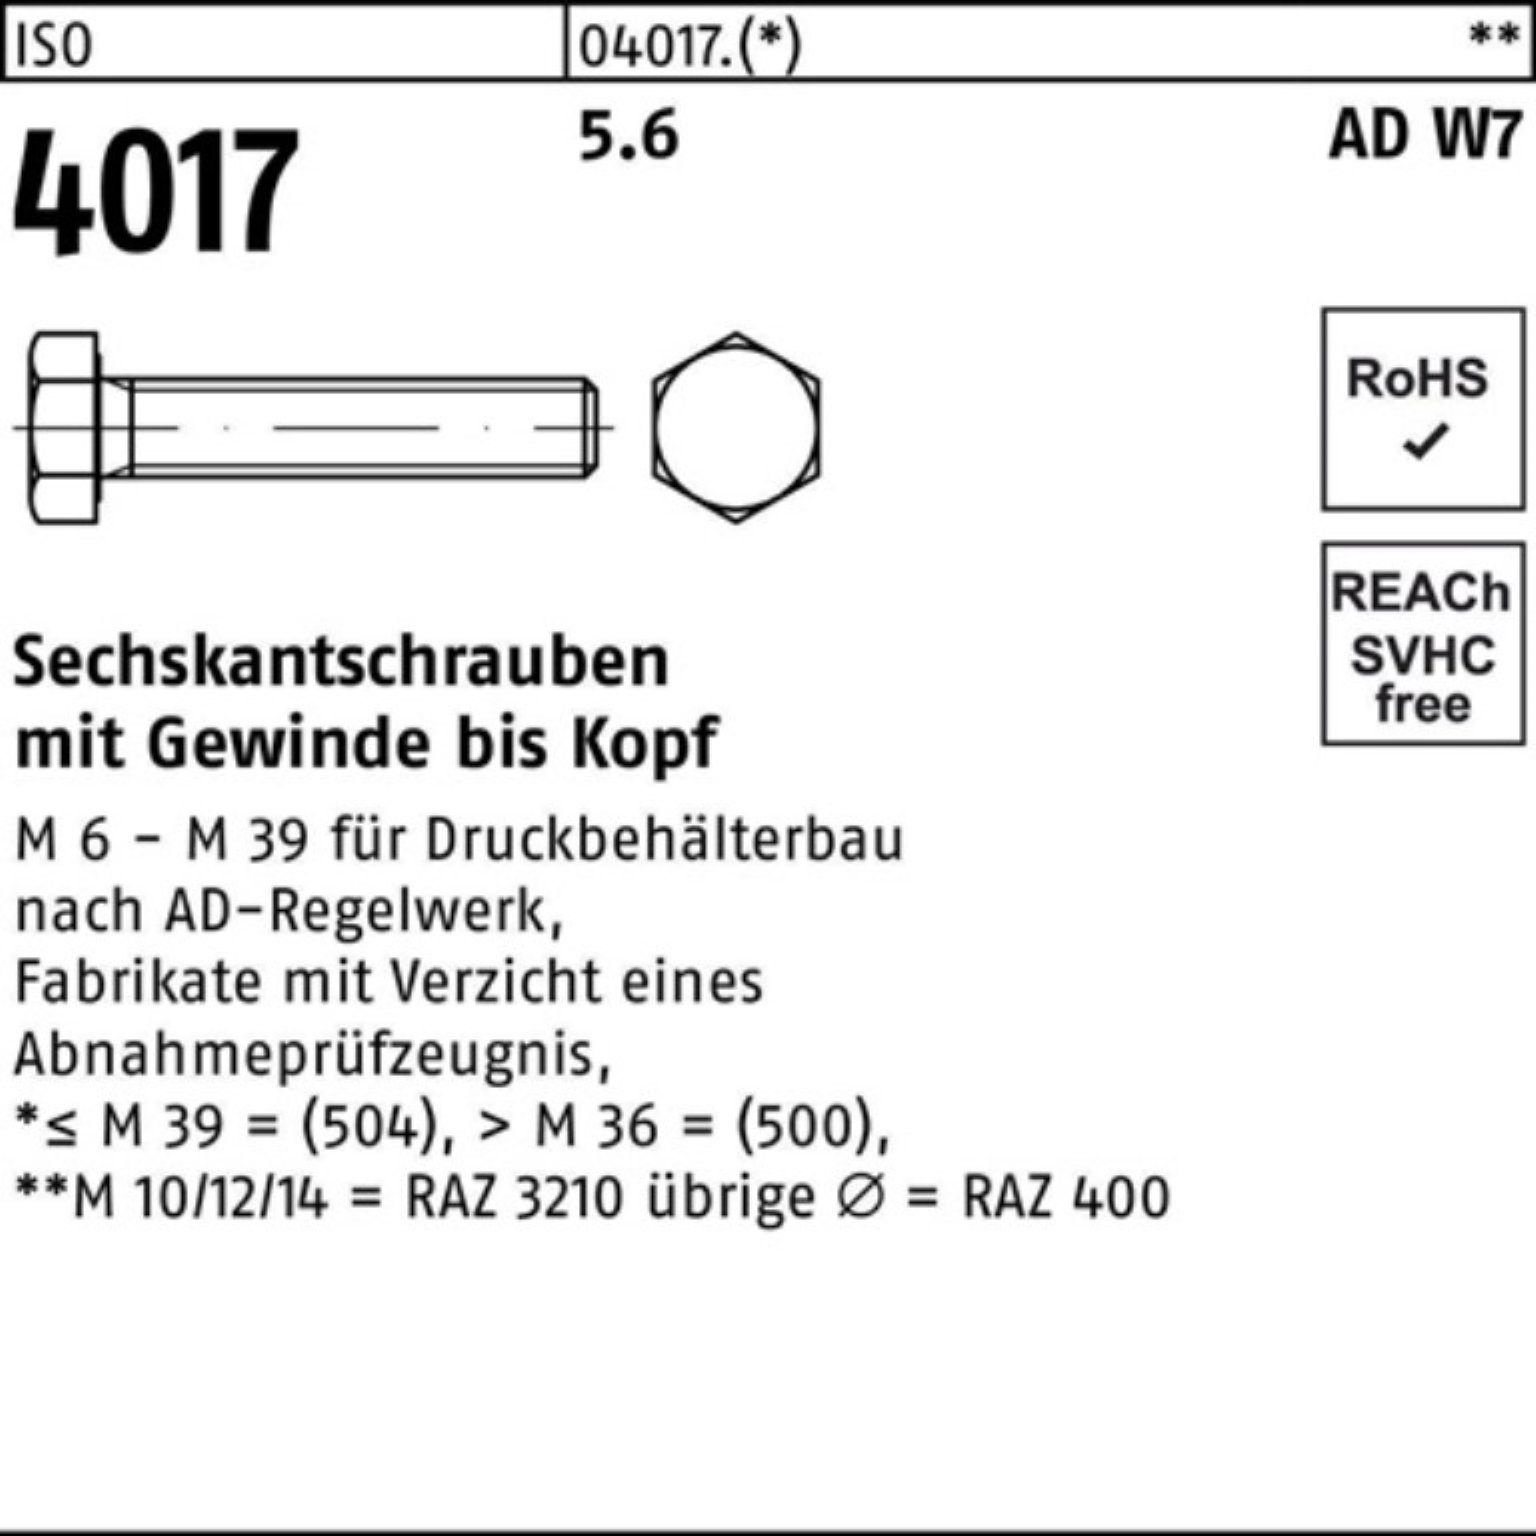 Sechskantschraube 100er Pack 4017 Bufab W7 5.6 25 Stück AD Sechskantschraube M20x 150 ISO VG